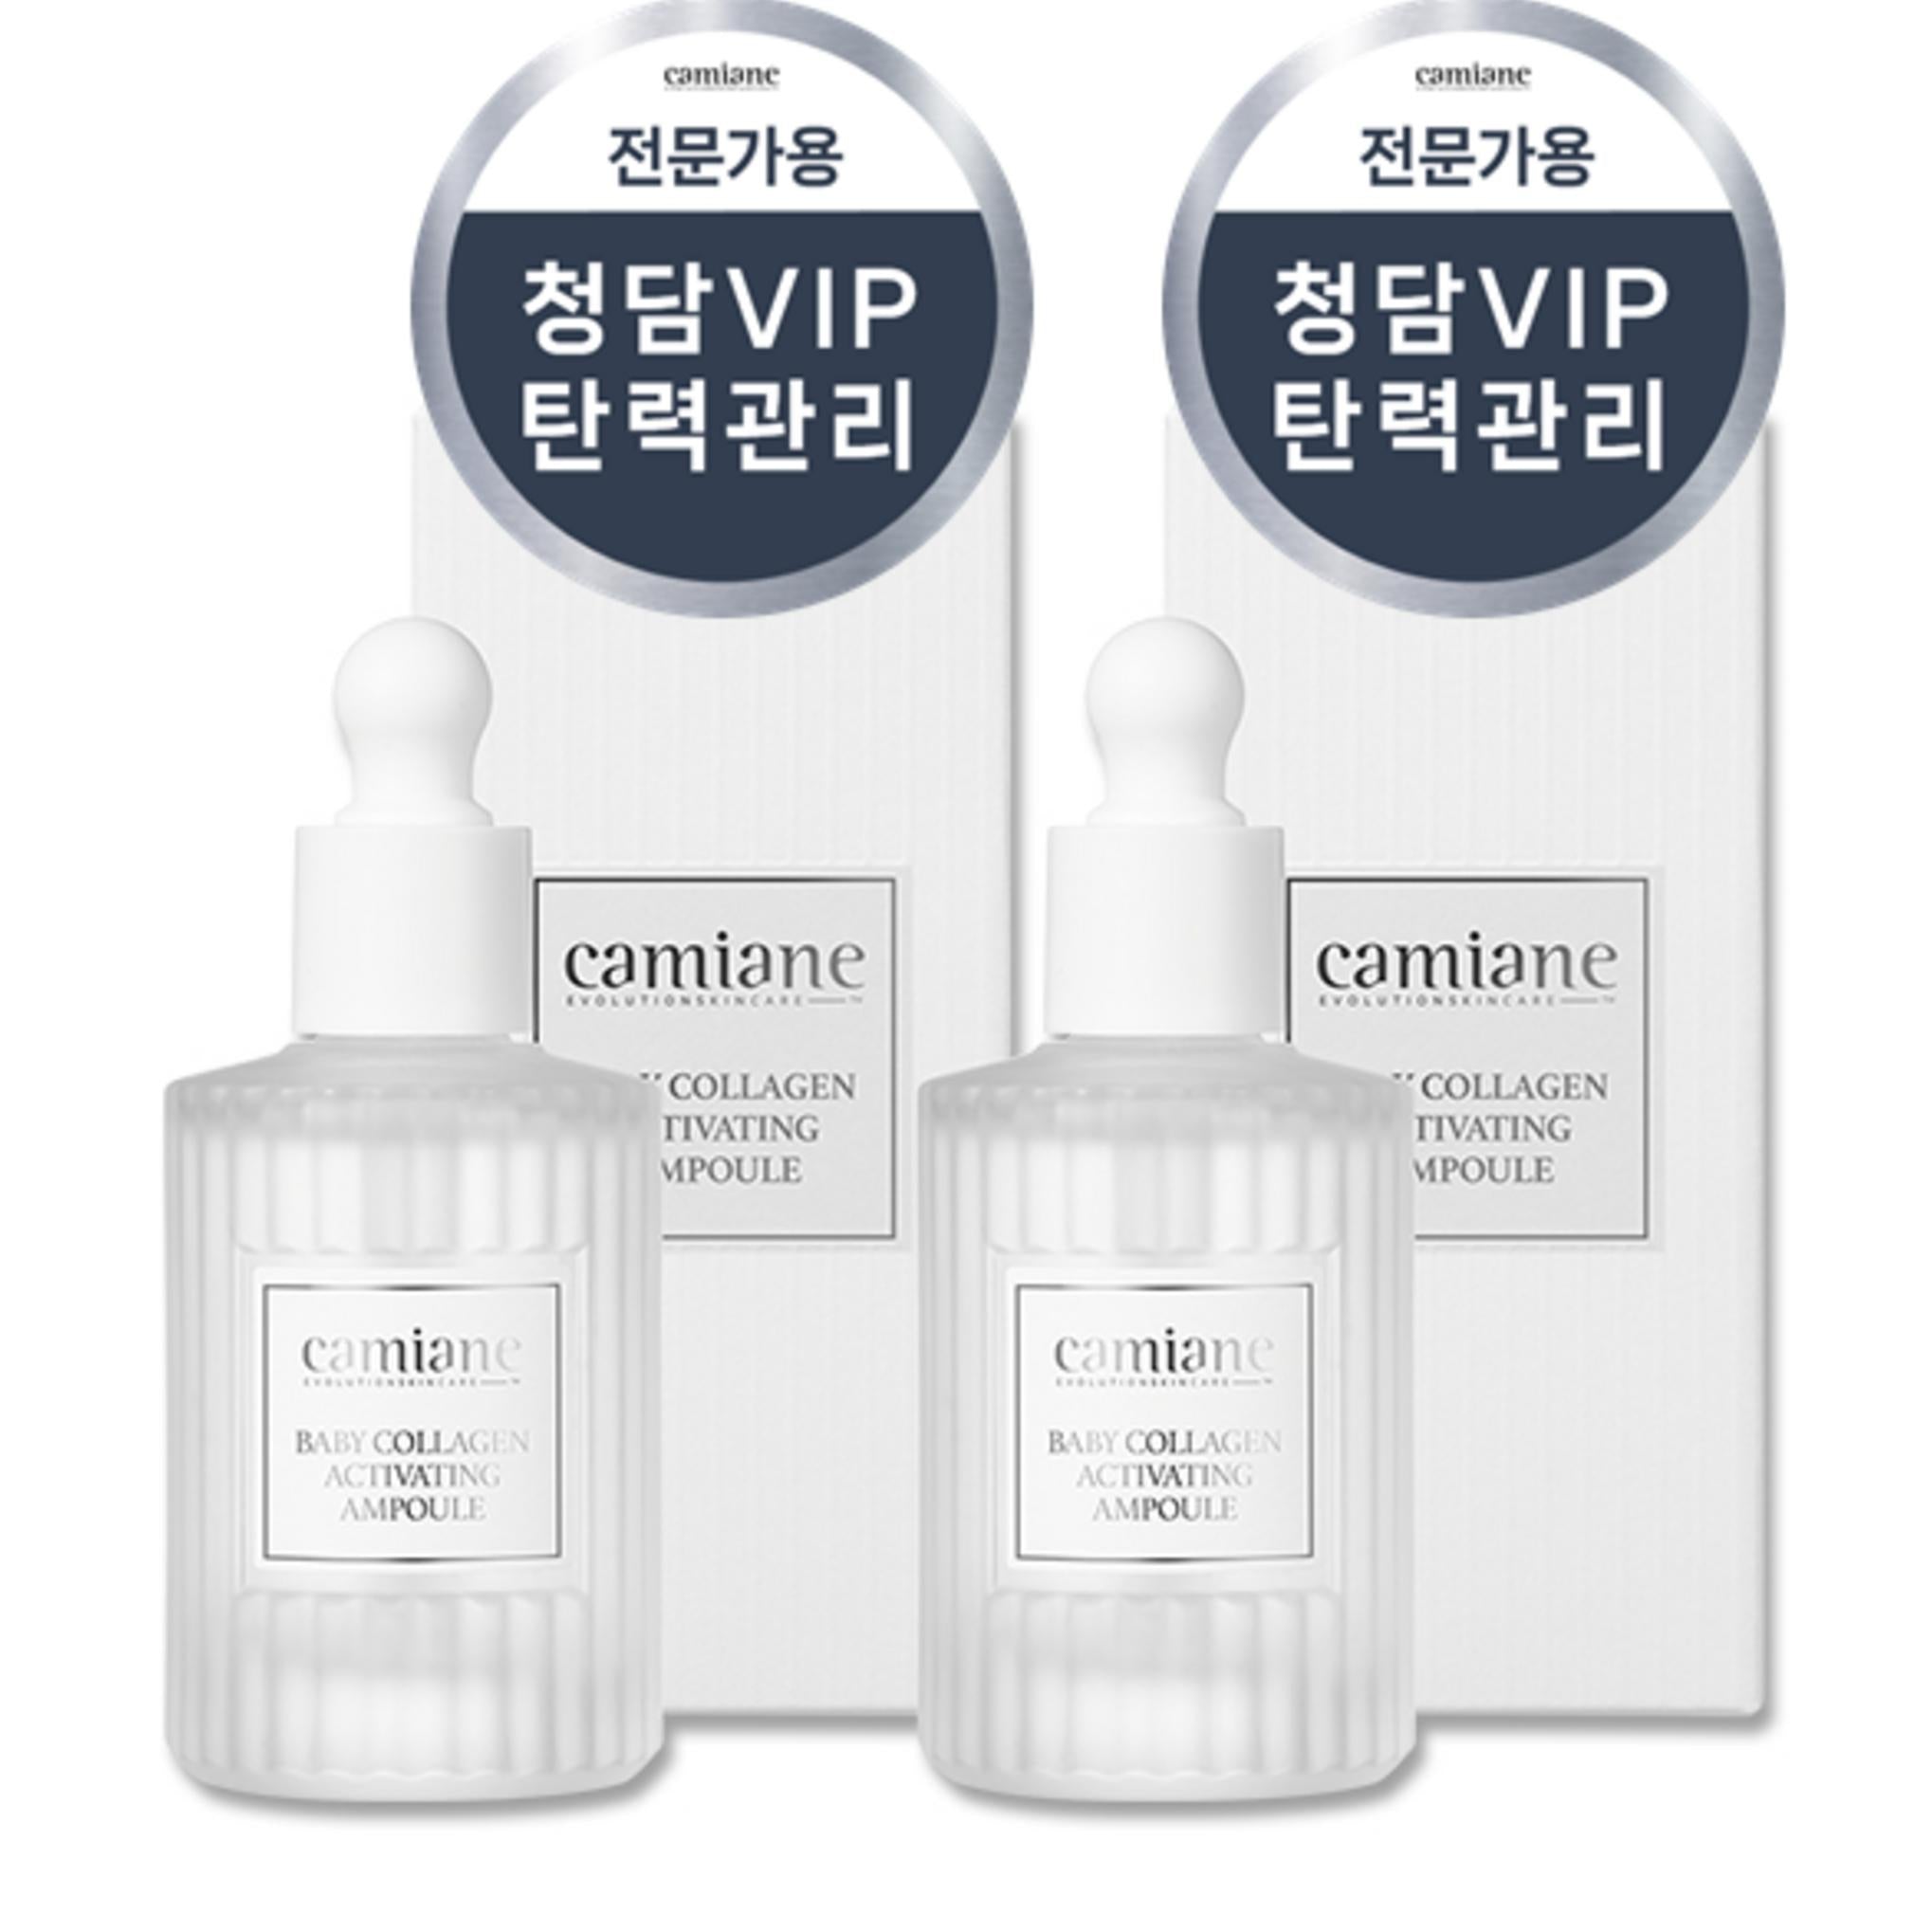 Cheongdam Spa Camianne Dry/Elastic Collagen Ampoule 2EA